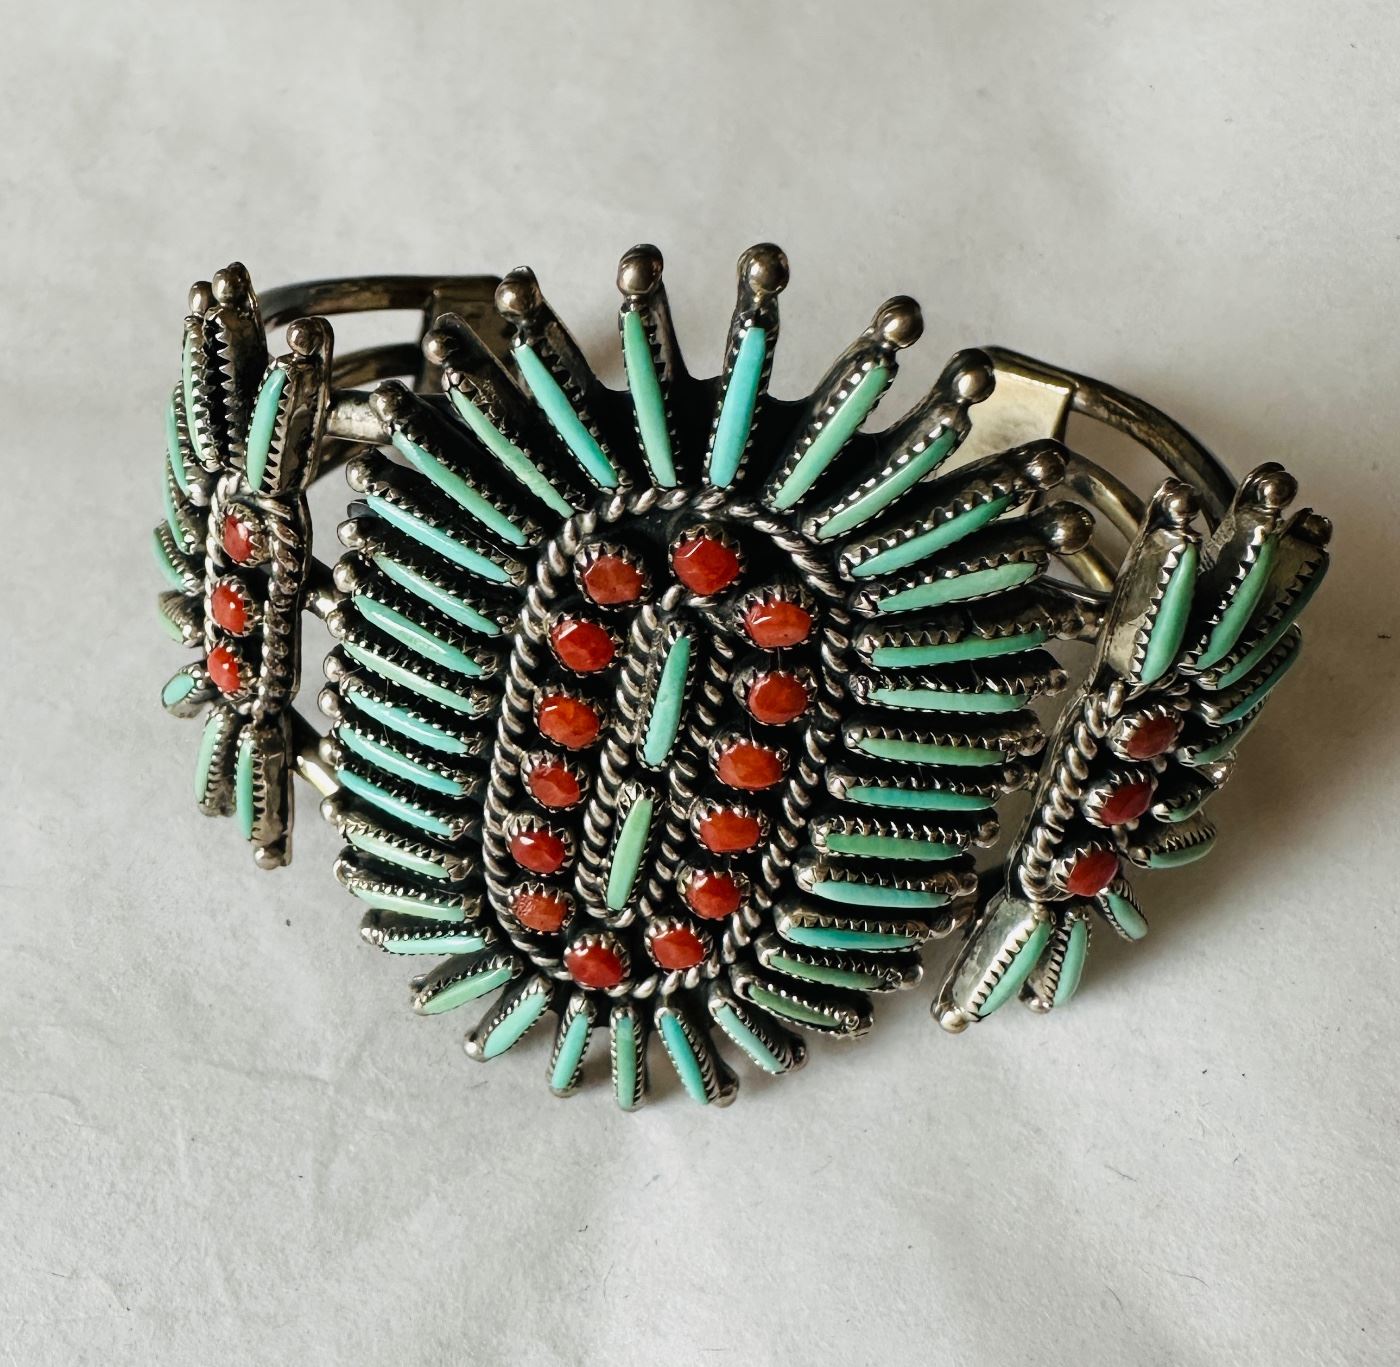 Amazing Navajo cuff bracelet